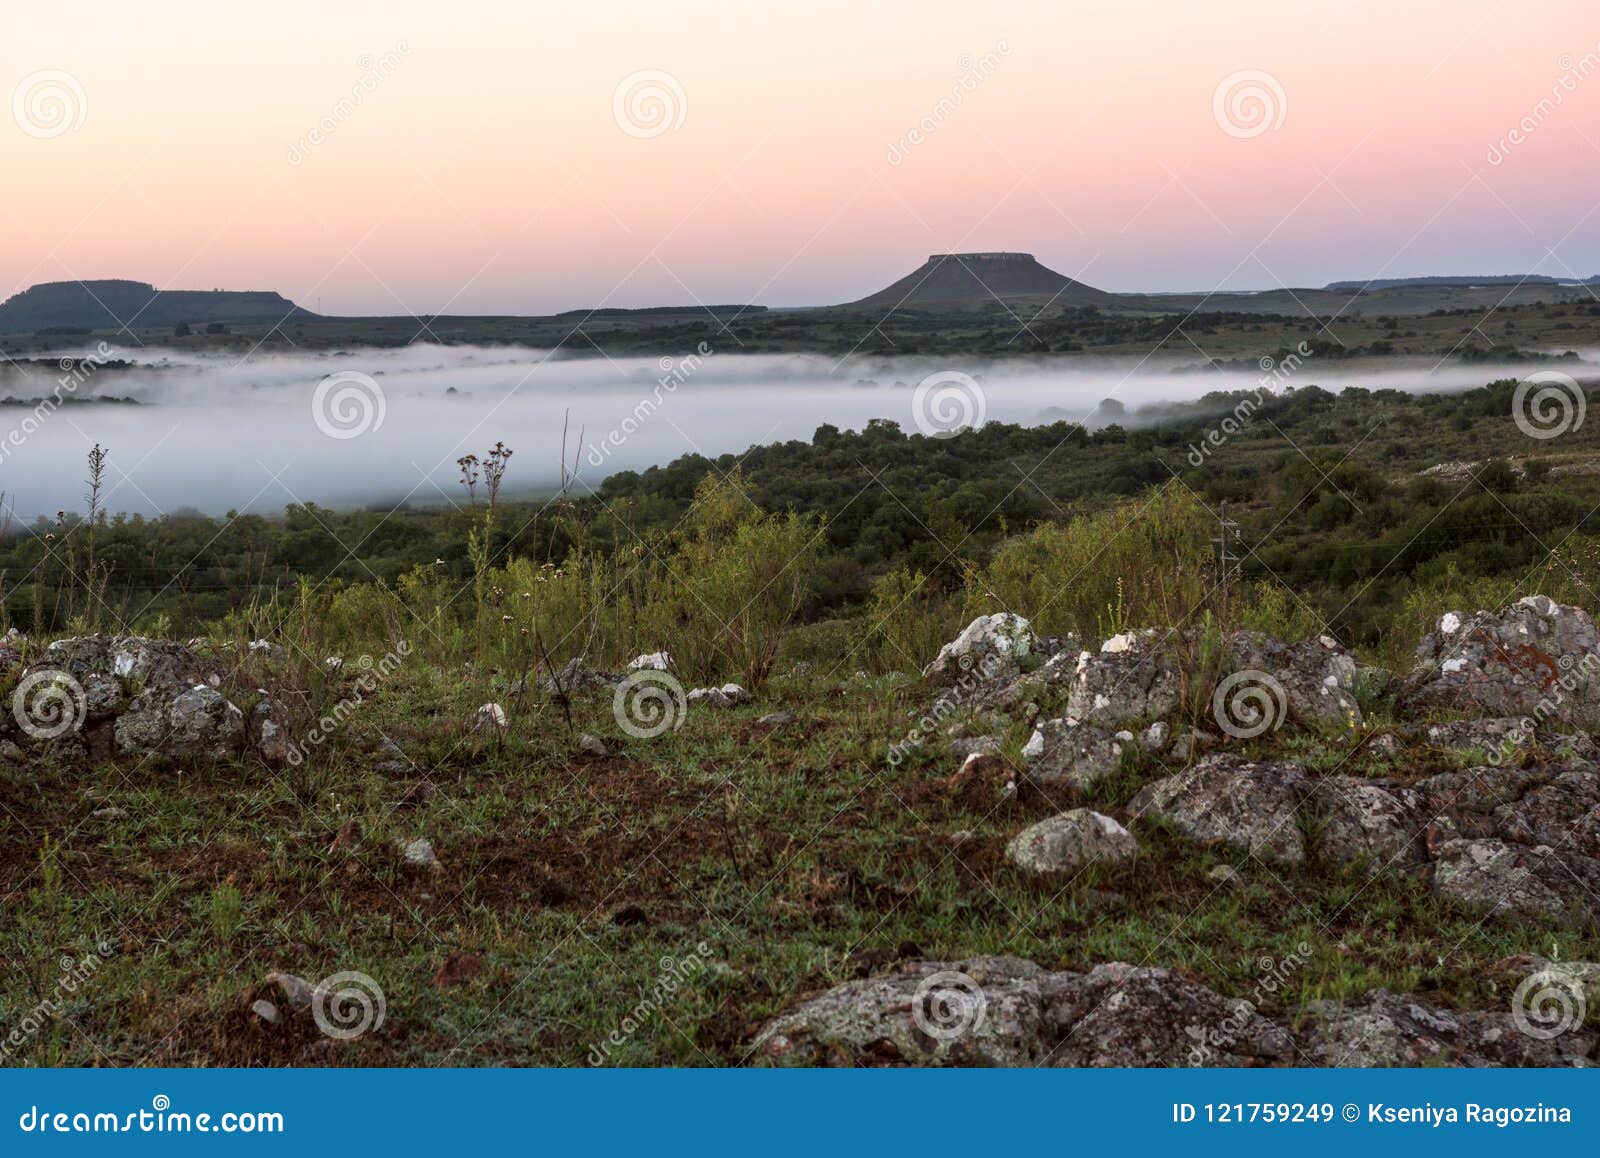 idyllic landscape of cuchilla del ombu, north-central uruguay